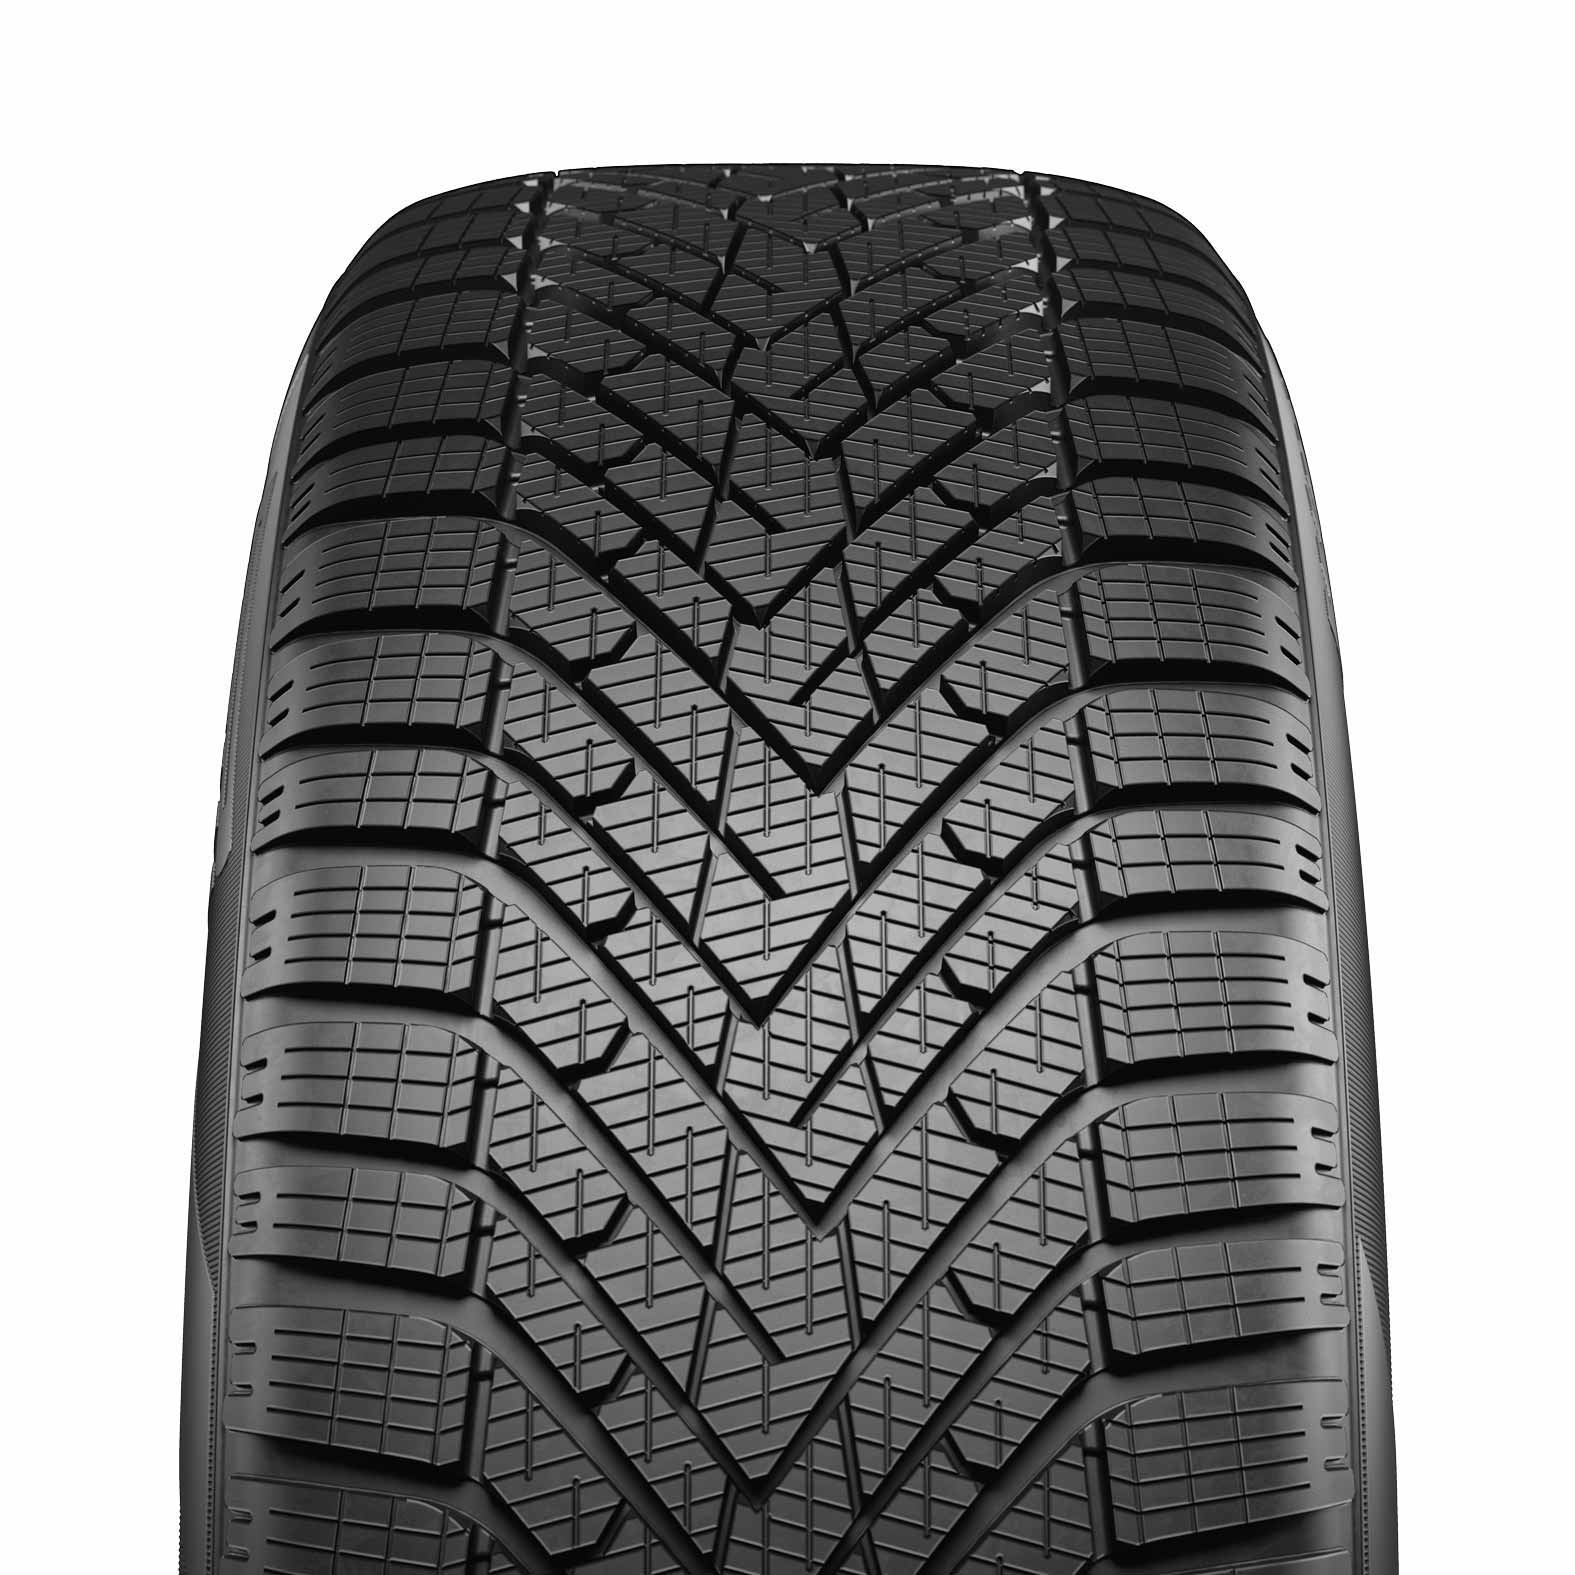 Pirelli Scorpion Winter 2 Tires for Winter | Kal Tire